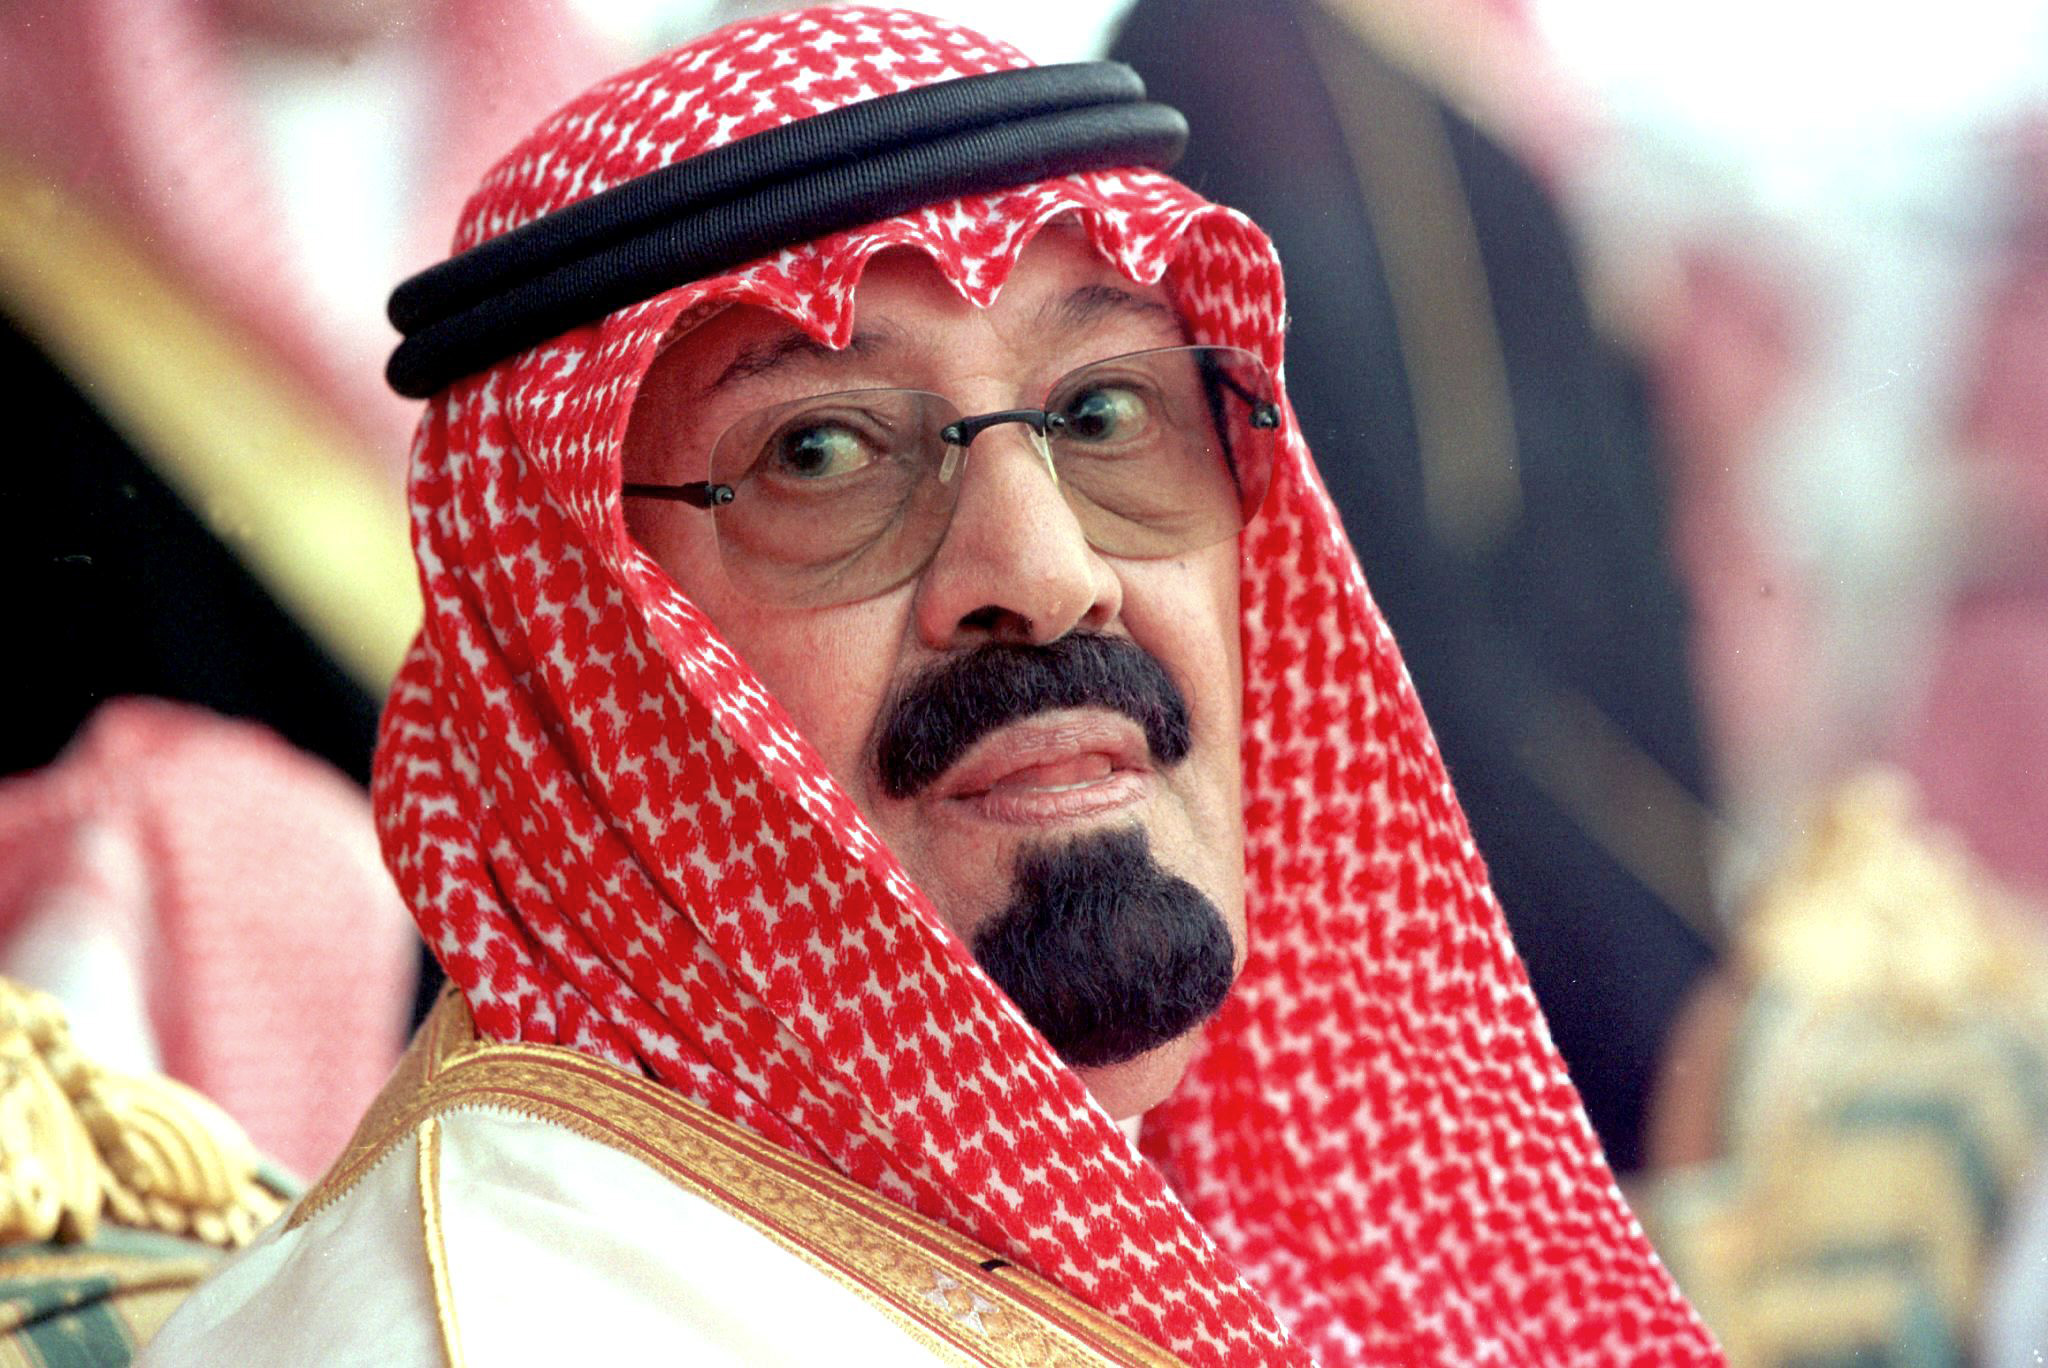 Morre o rei Abdullah, da Arábia Saudita | VEJA